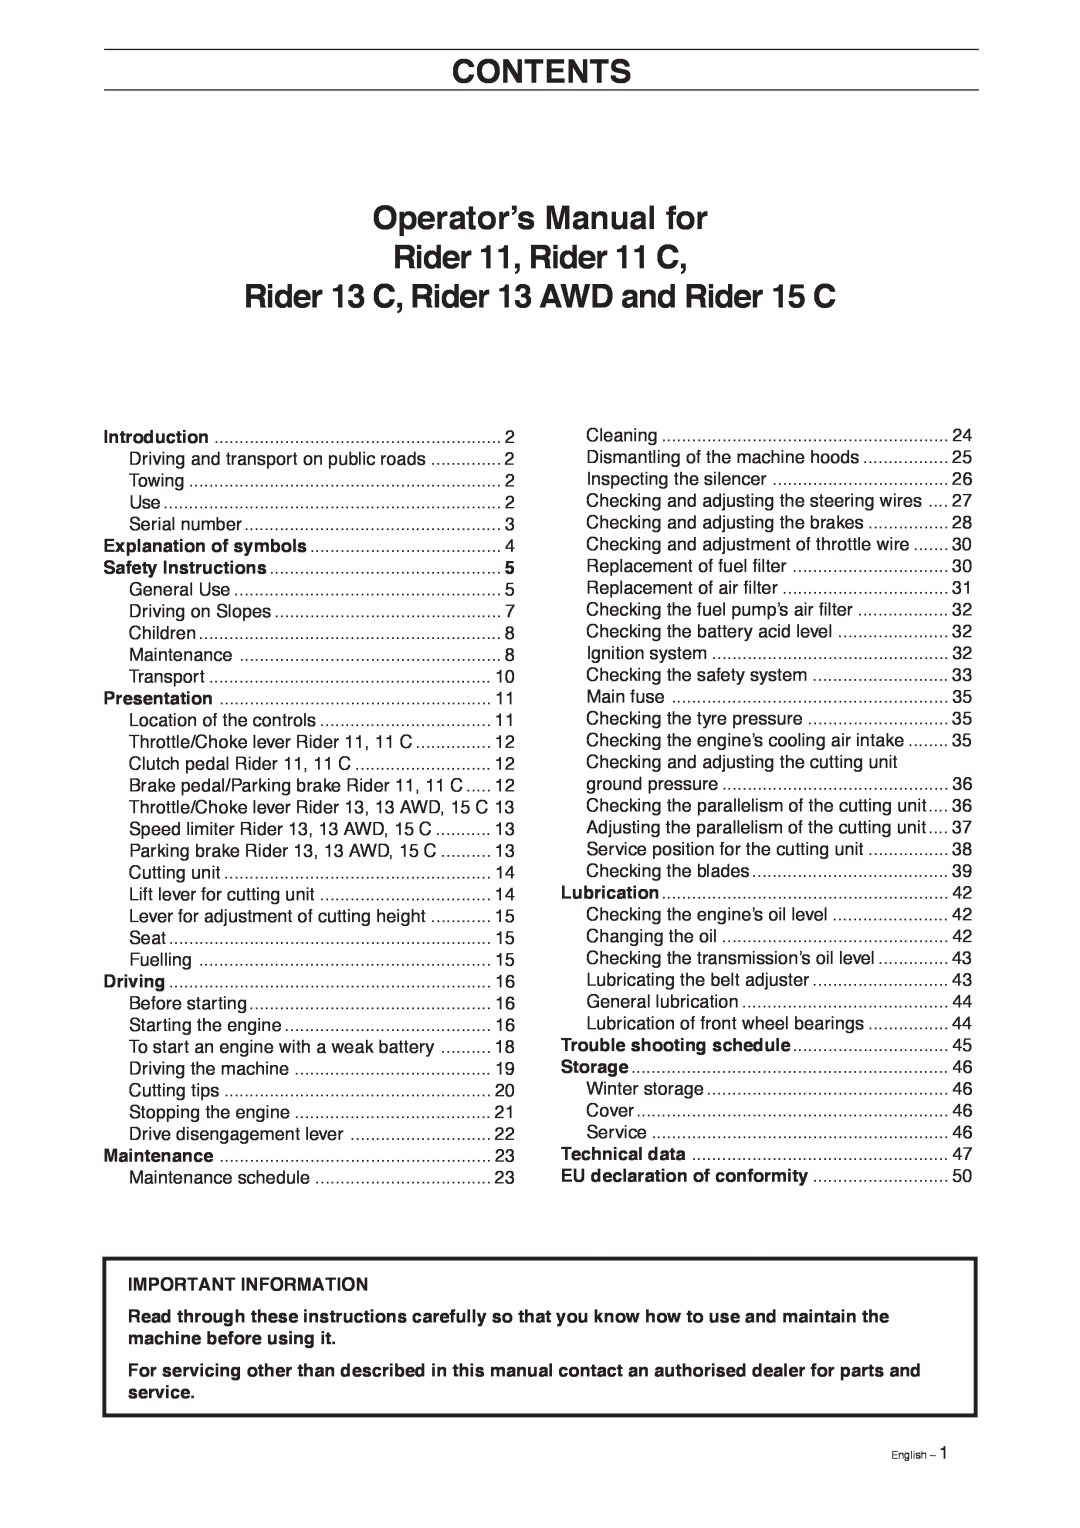 Husqvarna manual CONTENTS Operator’s Manual for Rider 11, Rider 11 C, Rider 13 C, Rider 13 AWD and Rider 15 C 